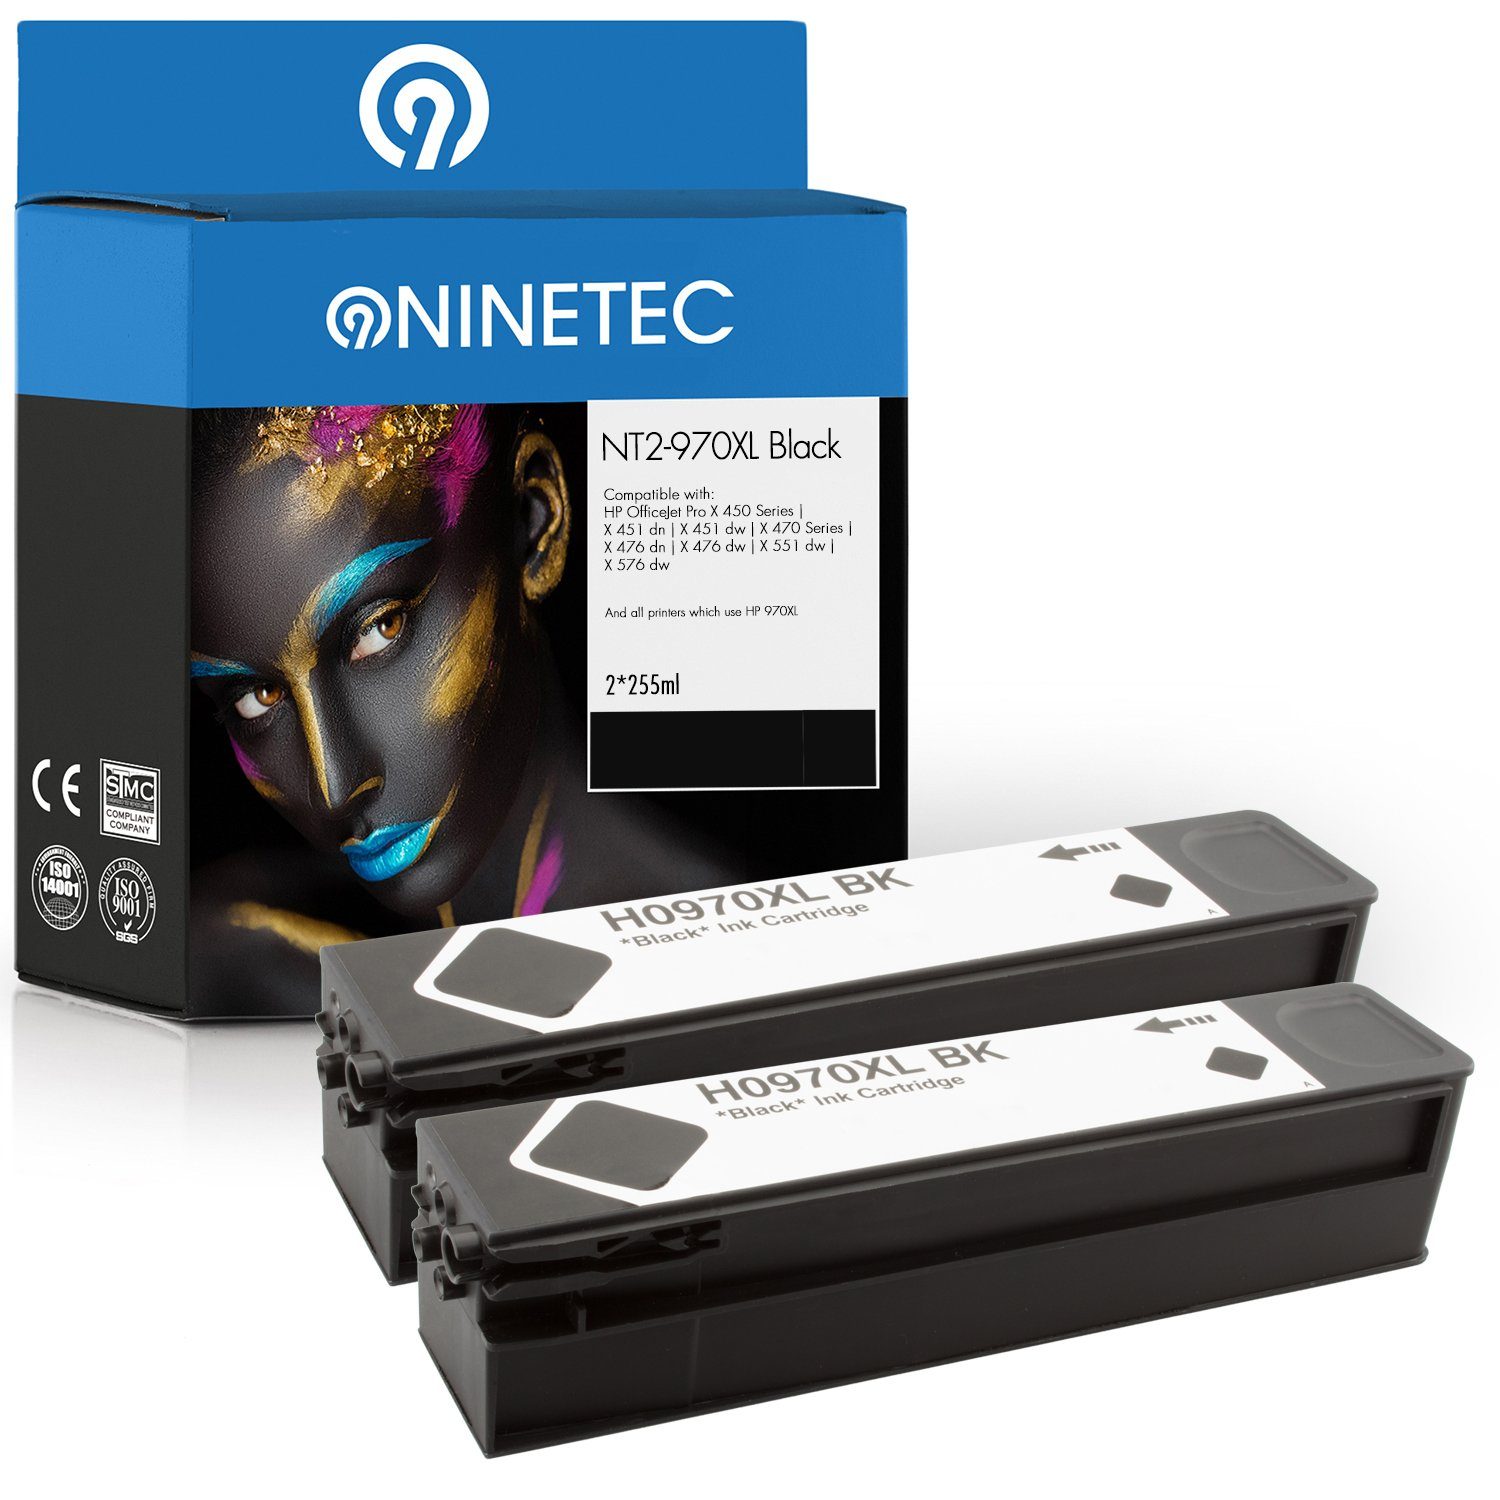 Black 970XL XL Tintenpatrone ersetzt HP NINETEC 970